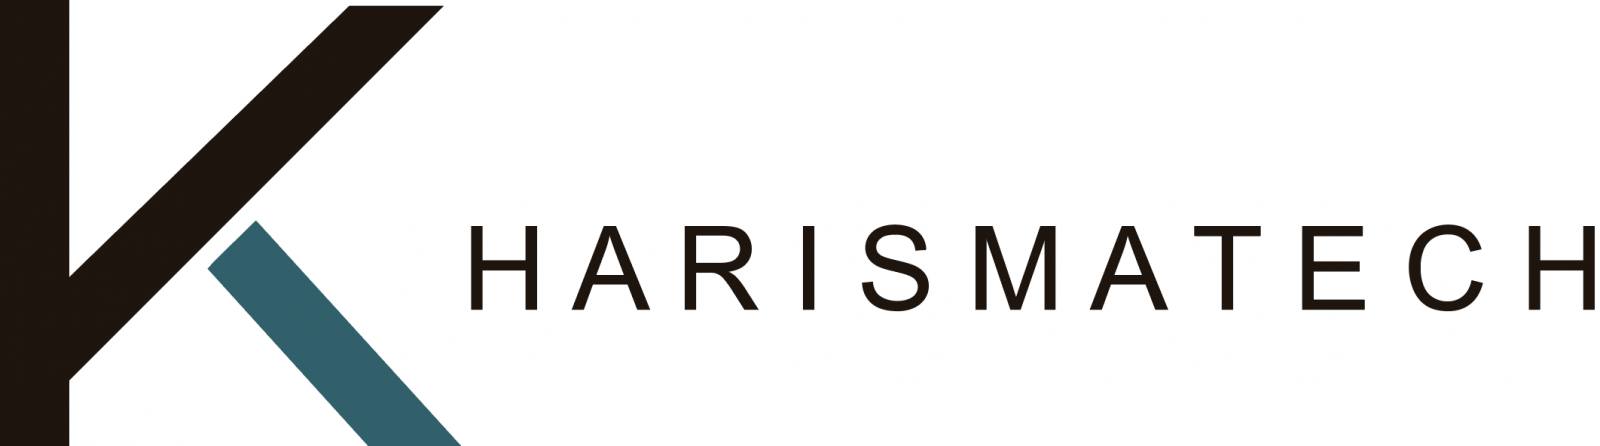 logo kharismatech